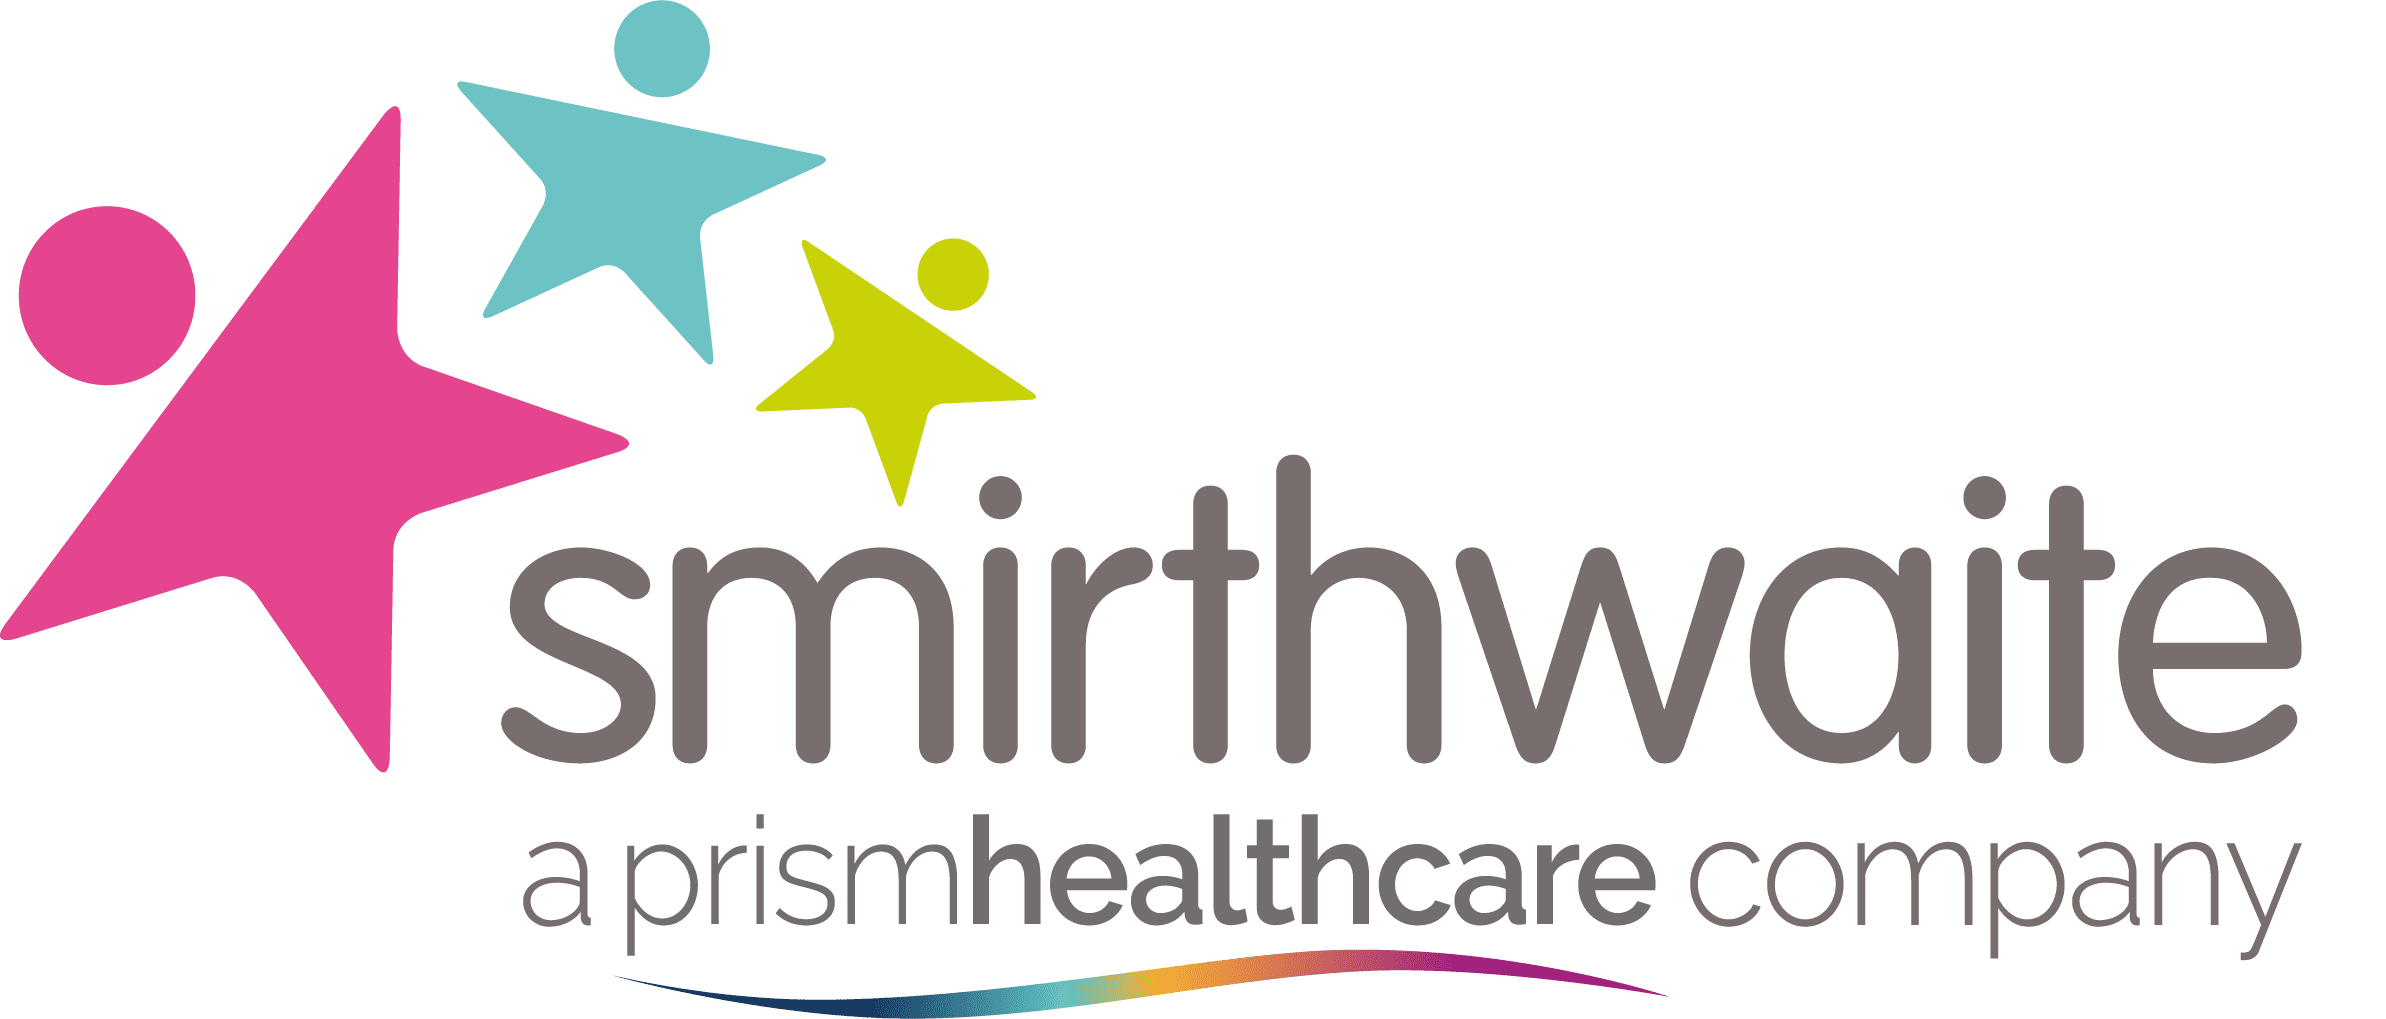 Prism Healthcare Smirthwaite logo